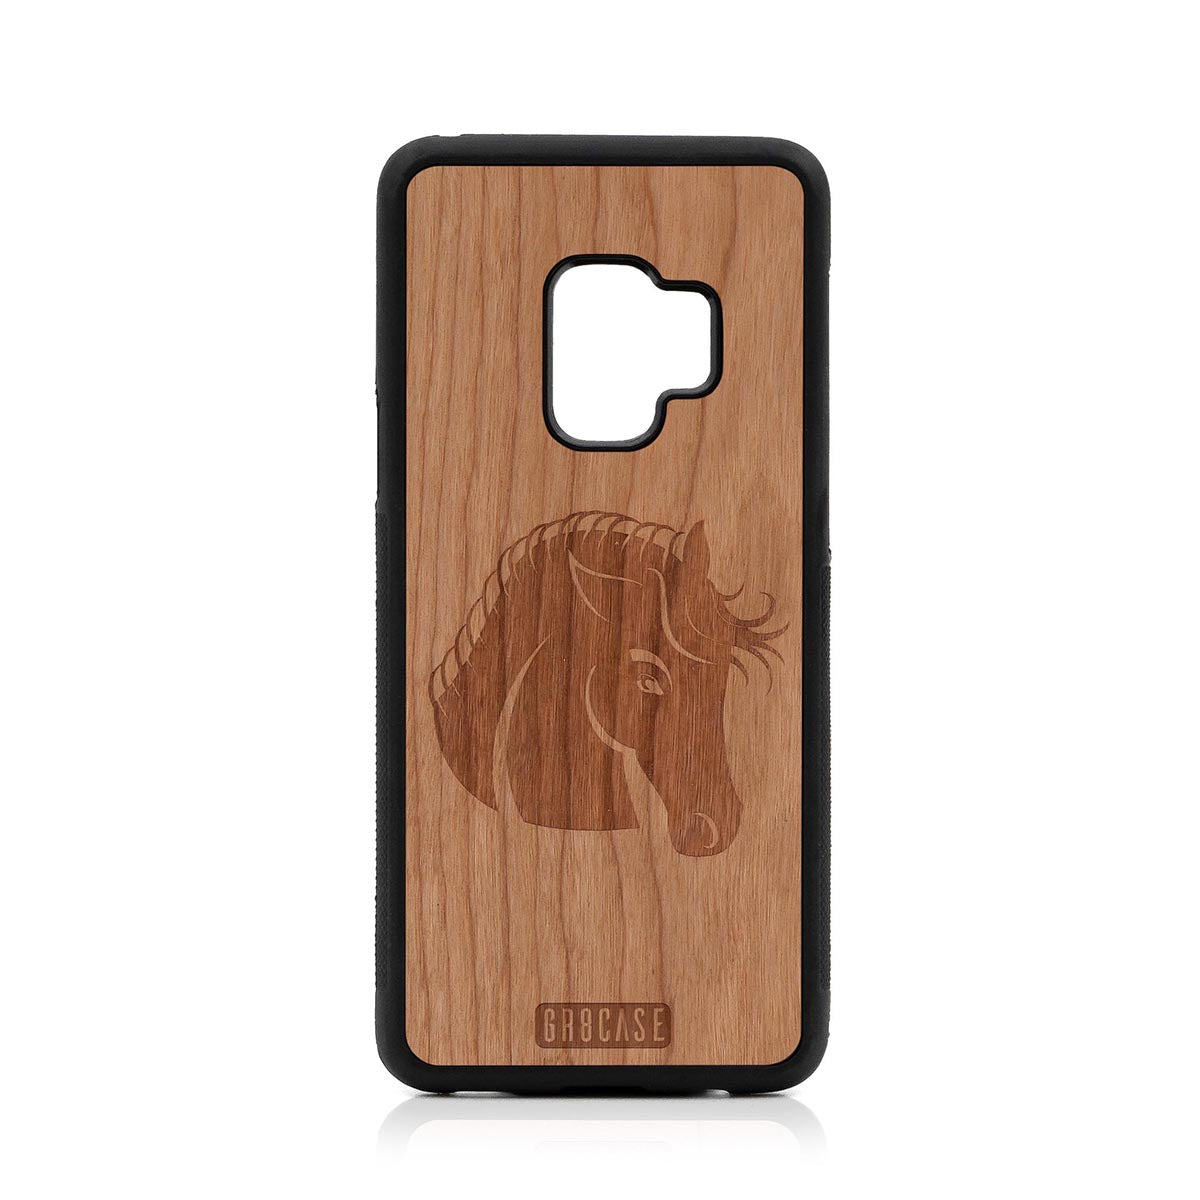 Horse Design Wood Case Samsung Galaxy S9 by GR8CASE